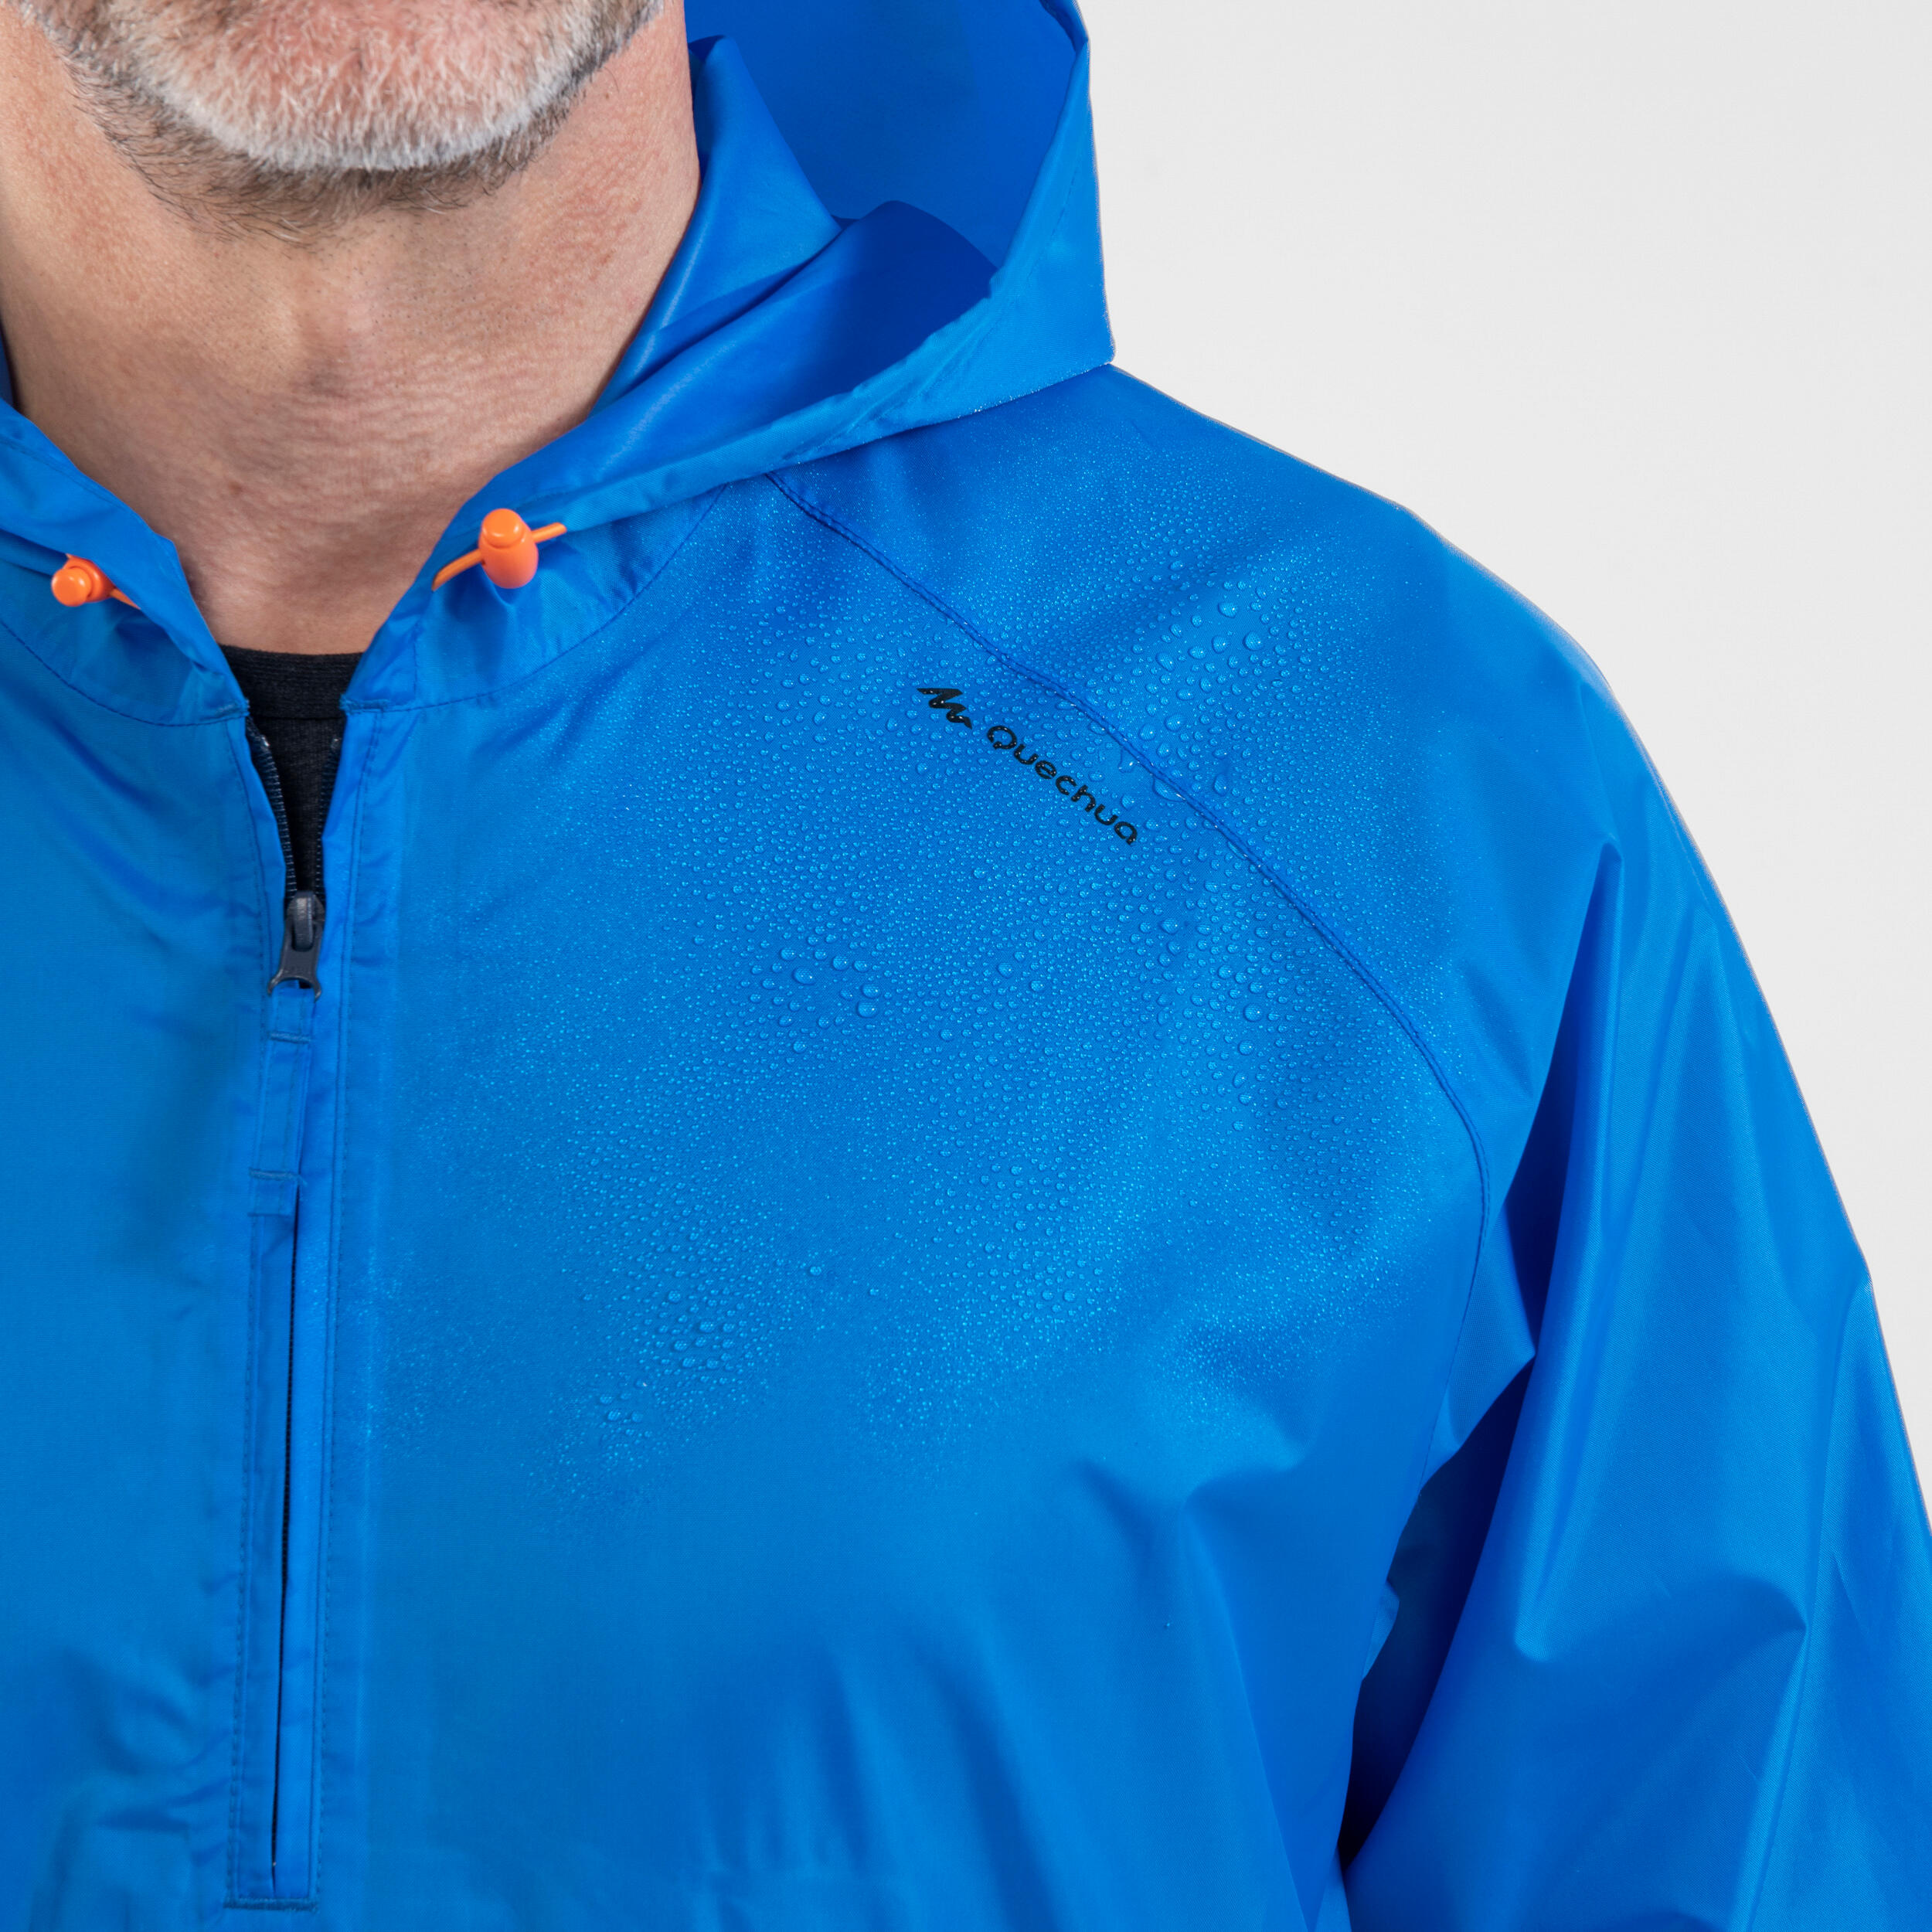 Buy Women's Hiking Waterproof Jacket Raincut Online | Decathlon